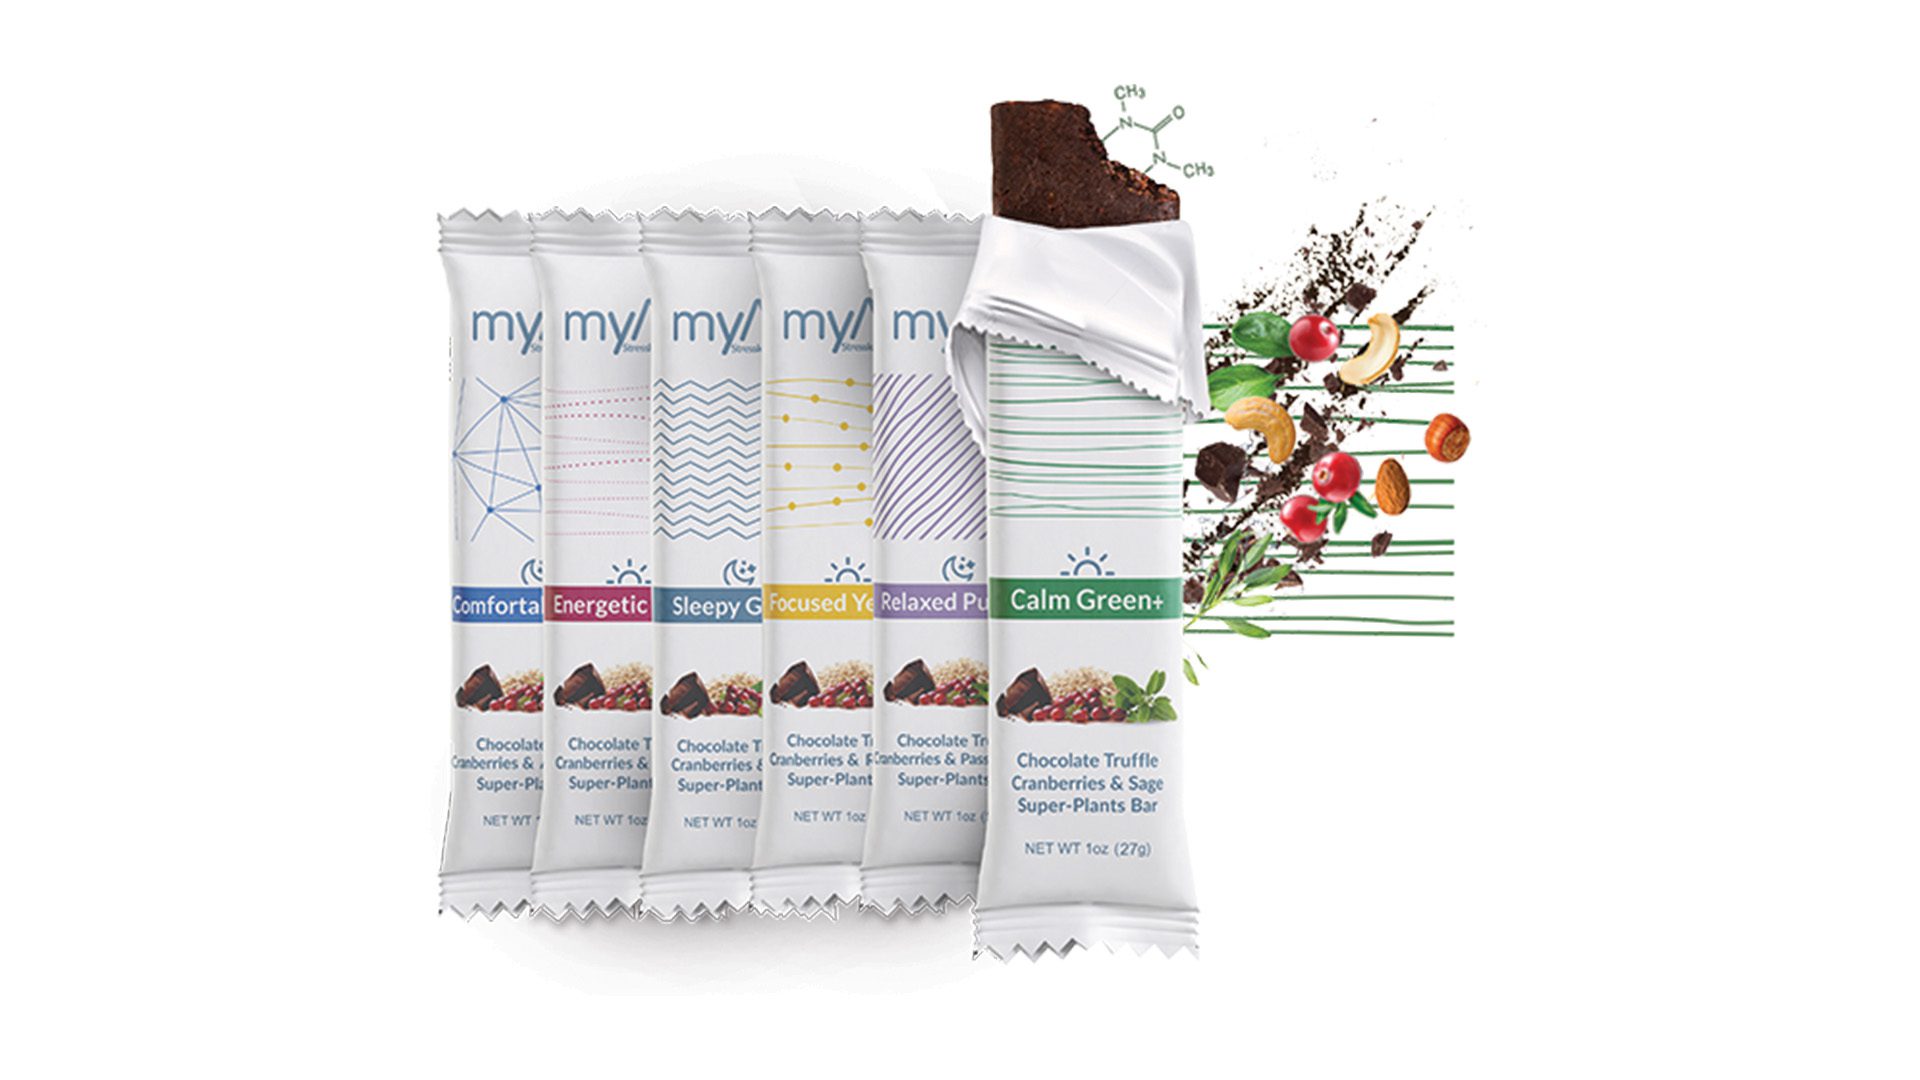 myAir healthy personalized granola bar